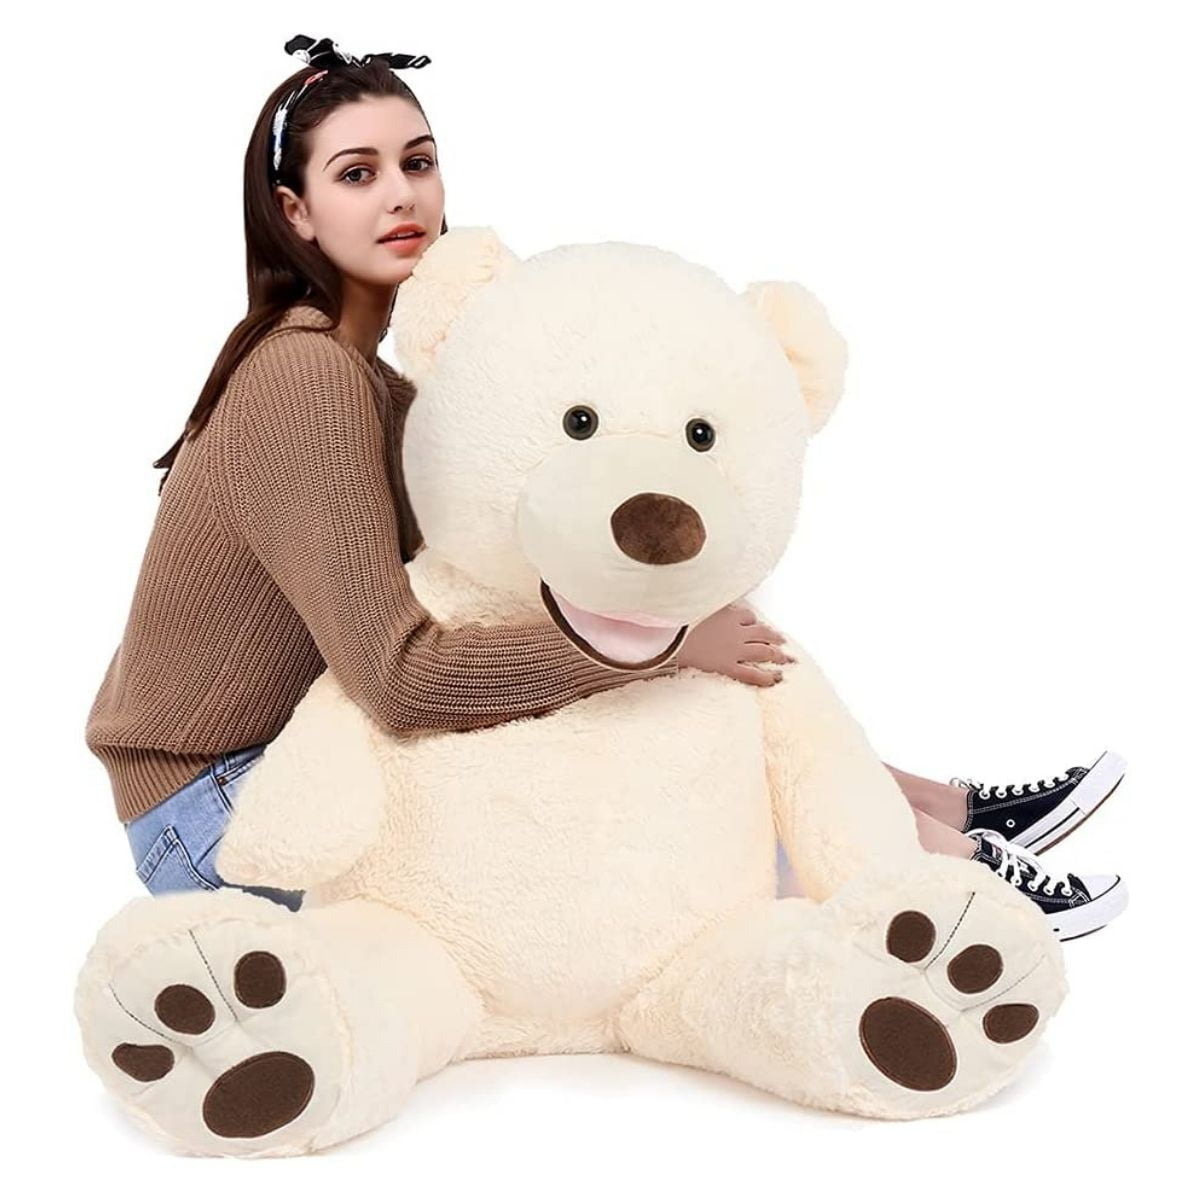 Big Teddy Bear 39 Inch Stuffed Animals Plush Toy for Girlfriend Children Gift for sale online 